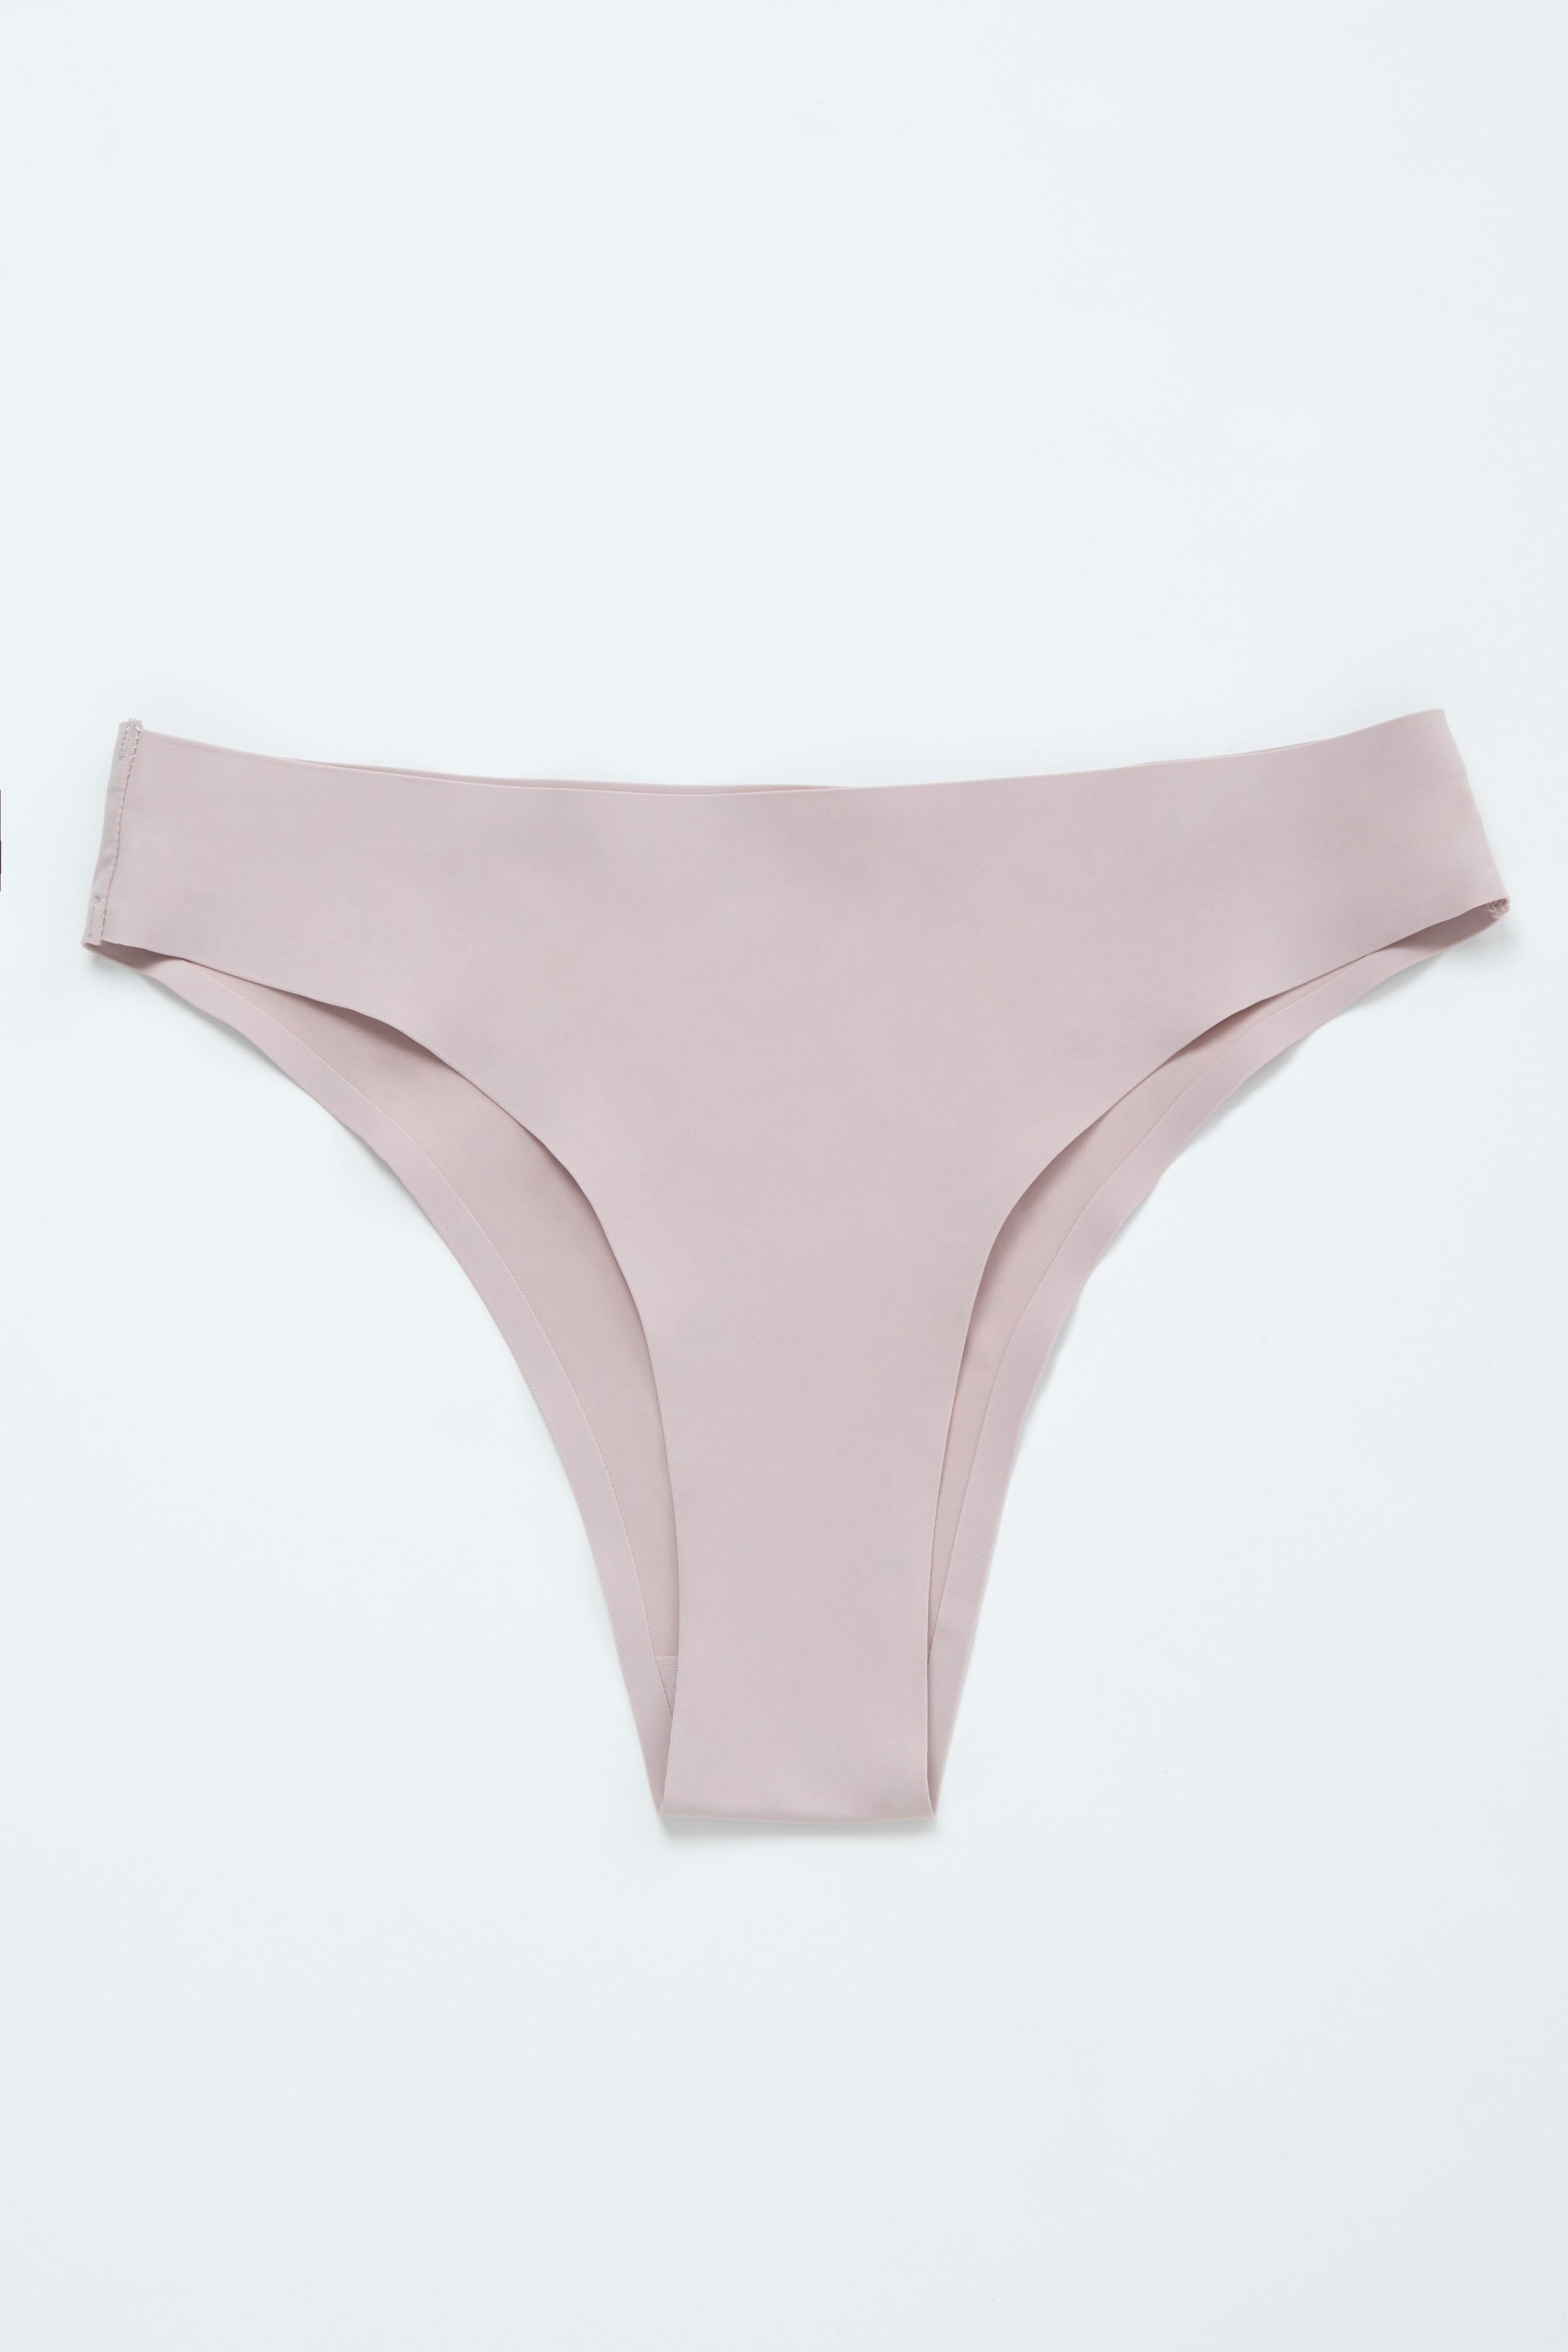 Teal Seamless High Waist Maternity Underwear– PinkBlush